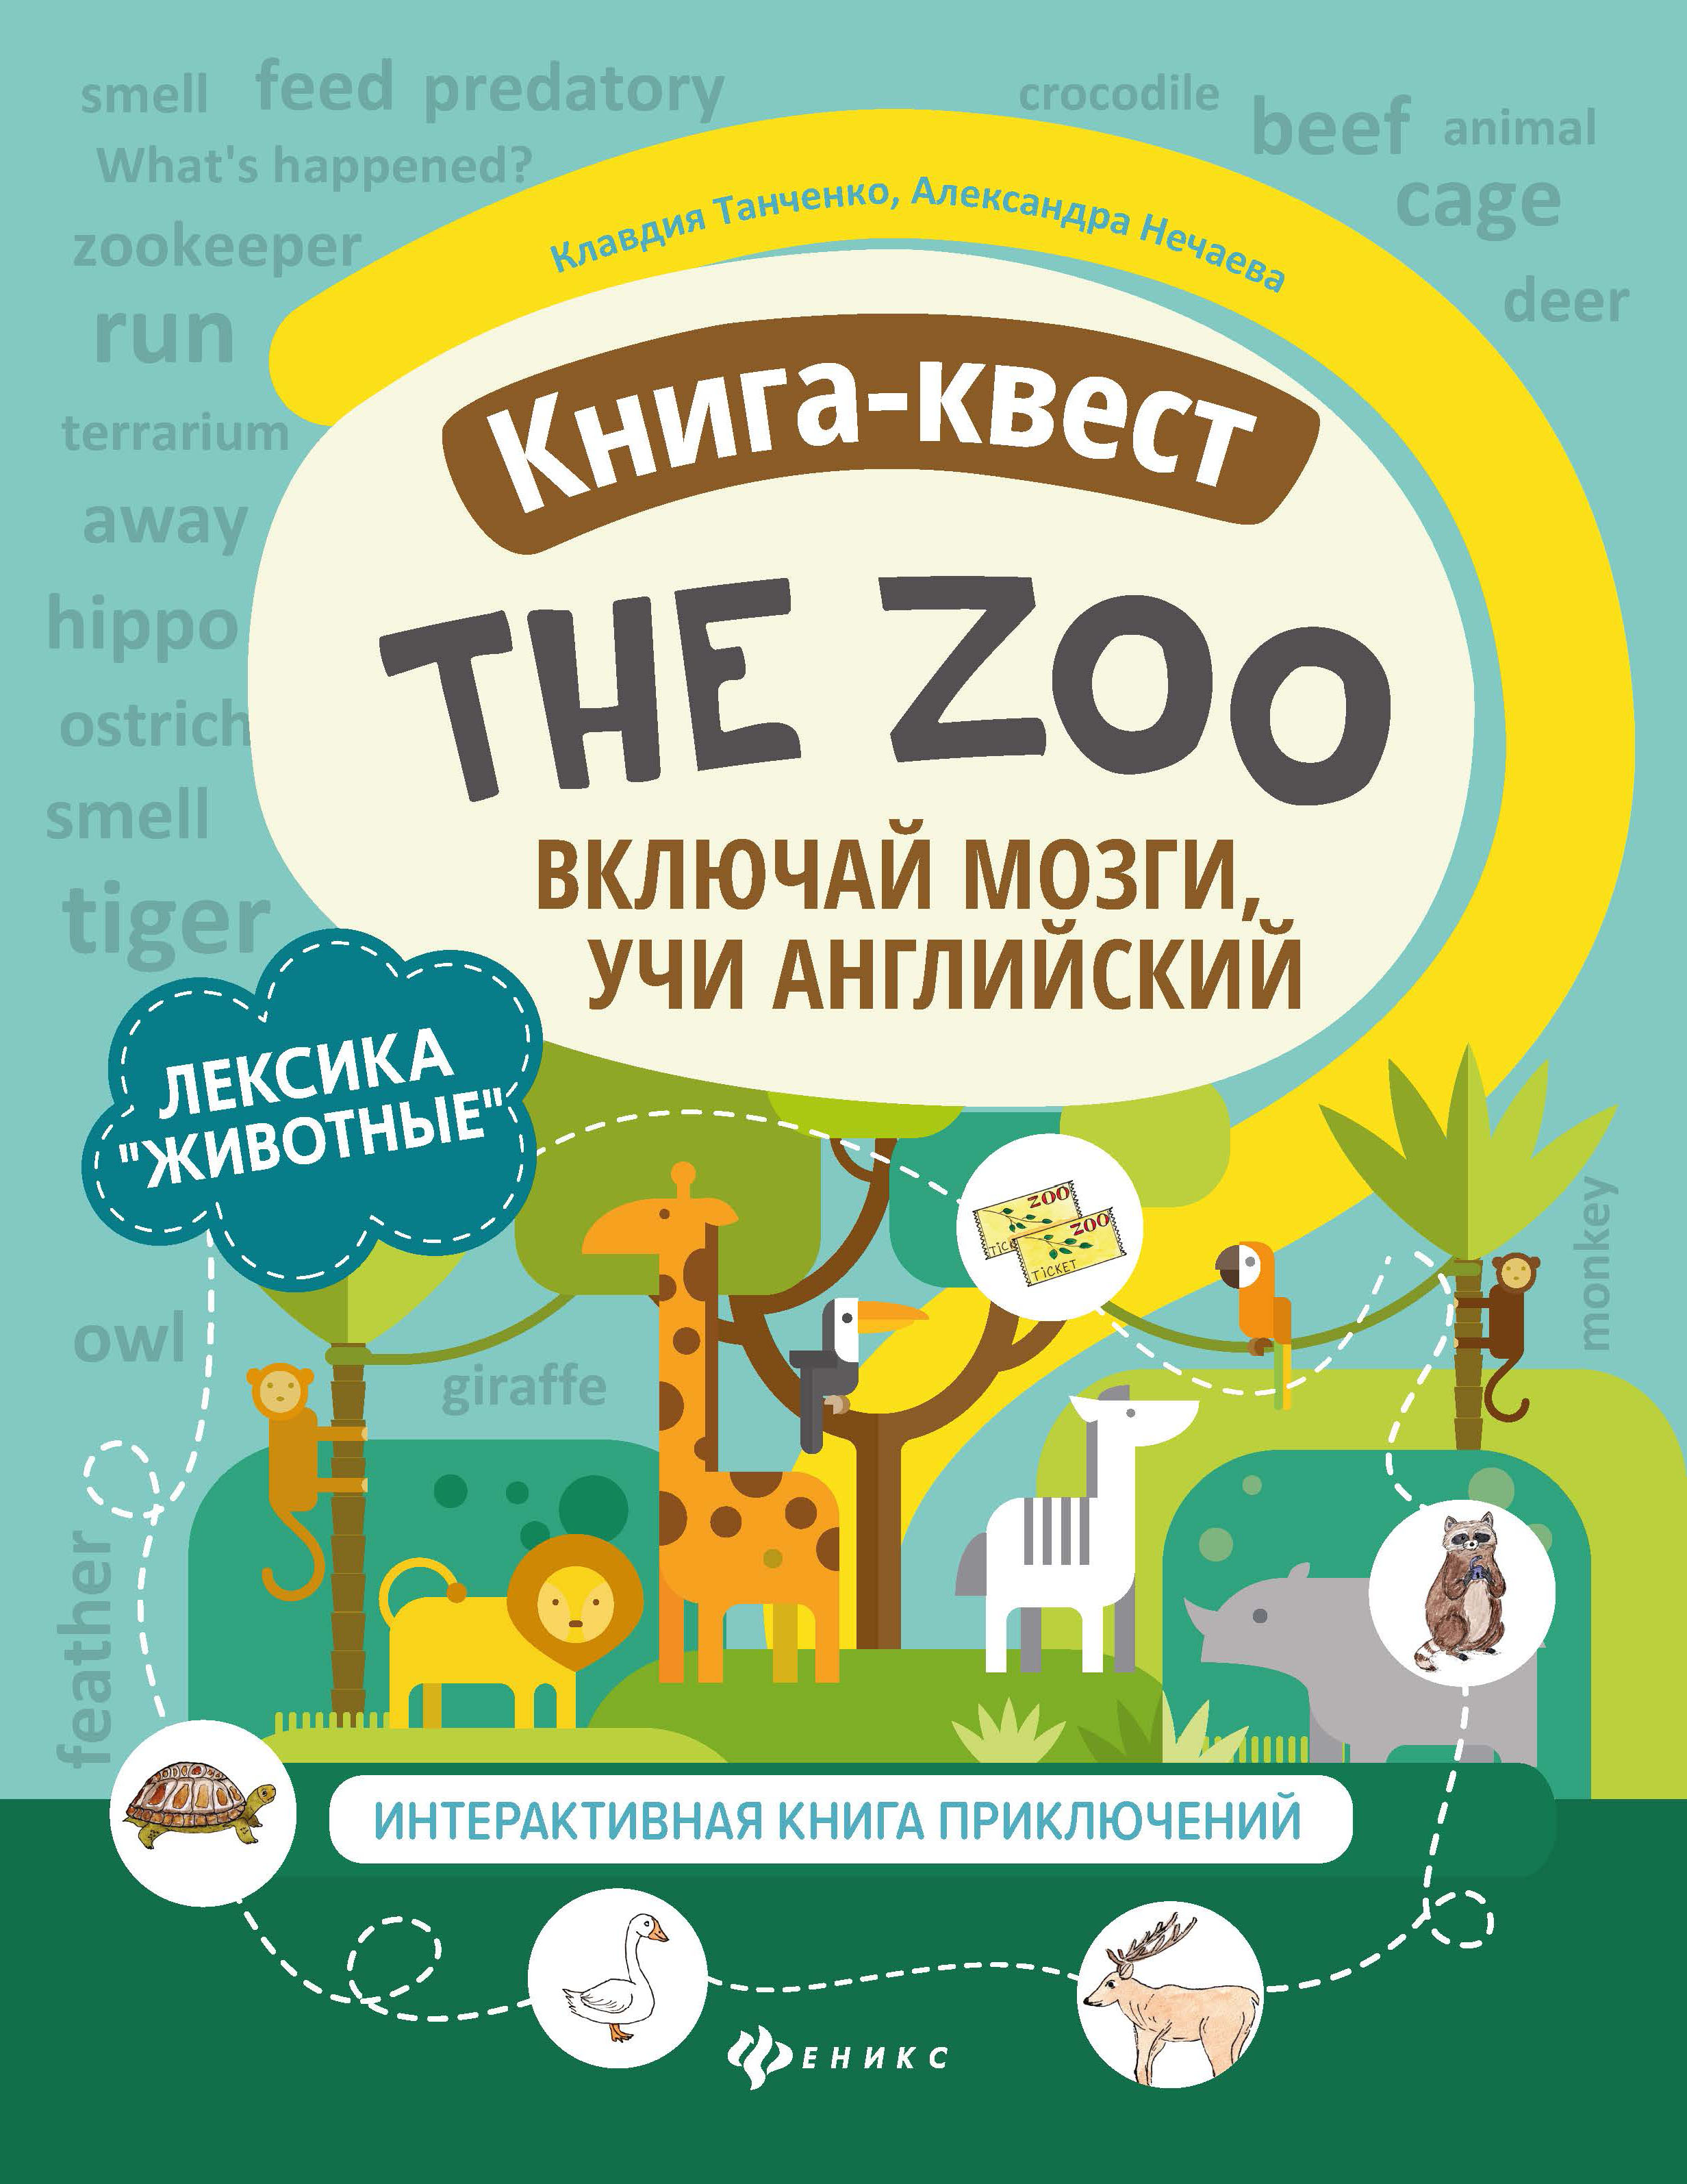 Книга-квестThe Zoo лексика Животные интерактивная книга приключений ТД Феникс